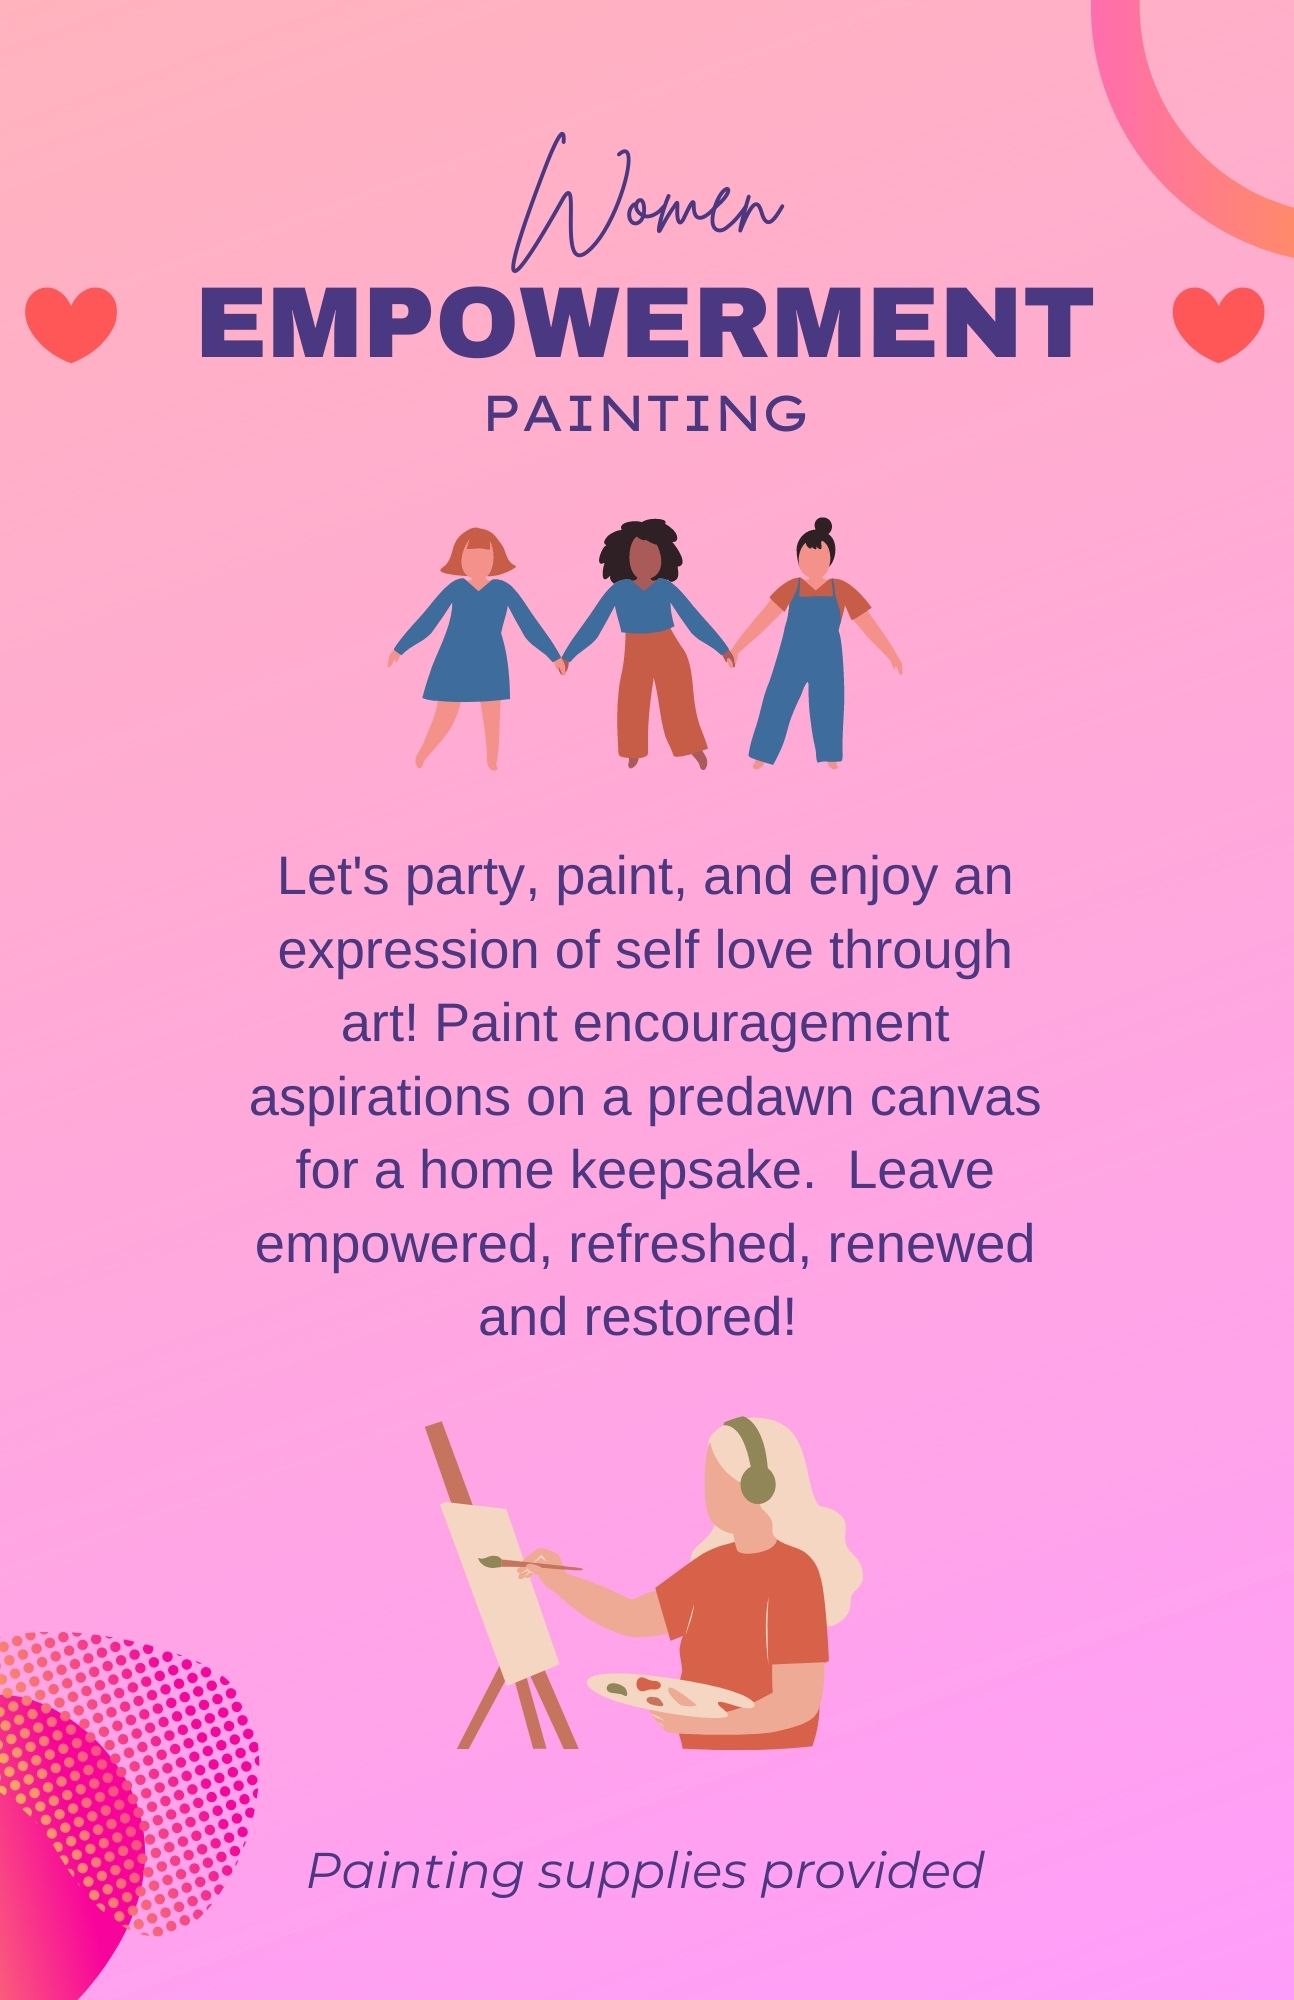 Women Empowerment Painting flyer 